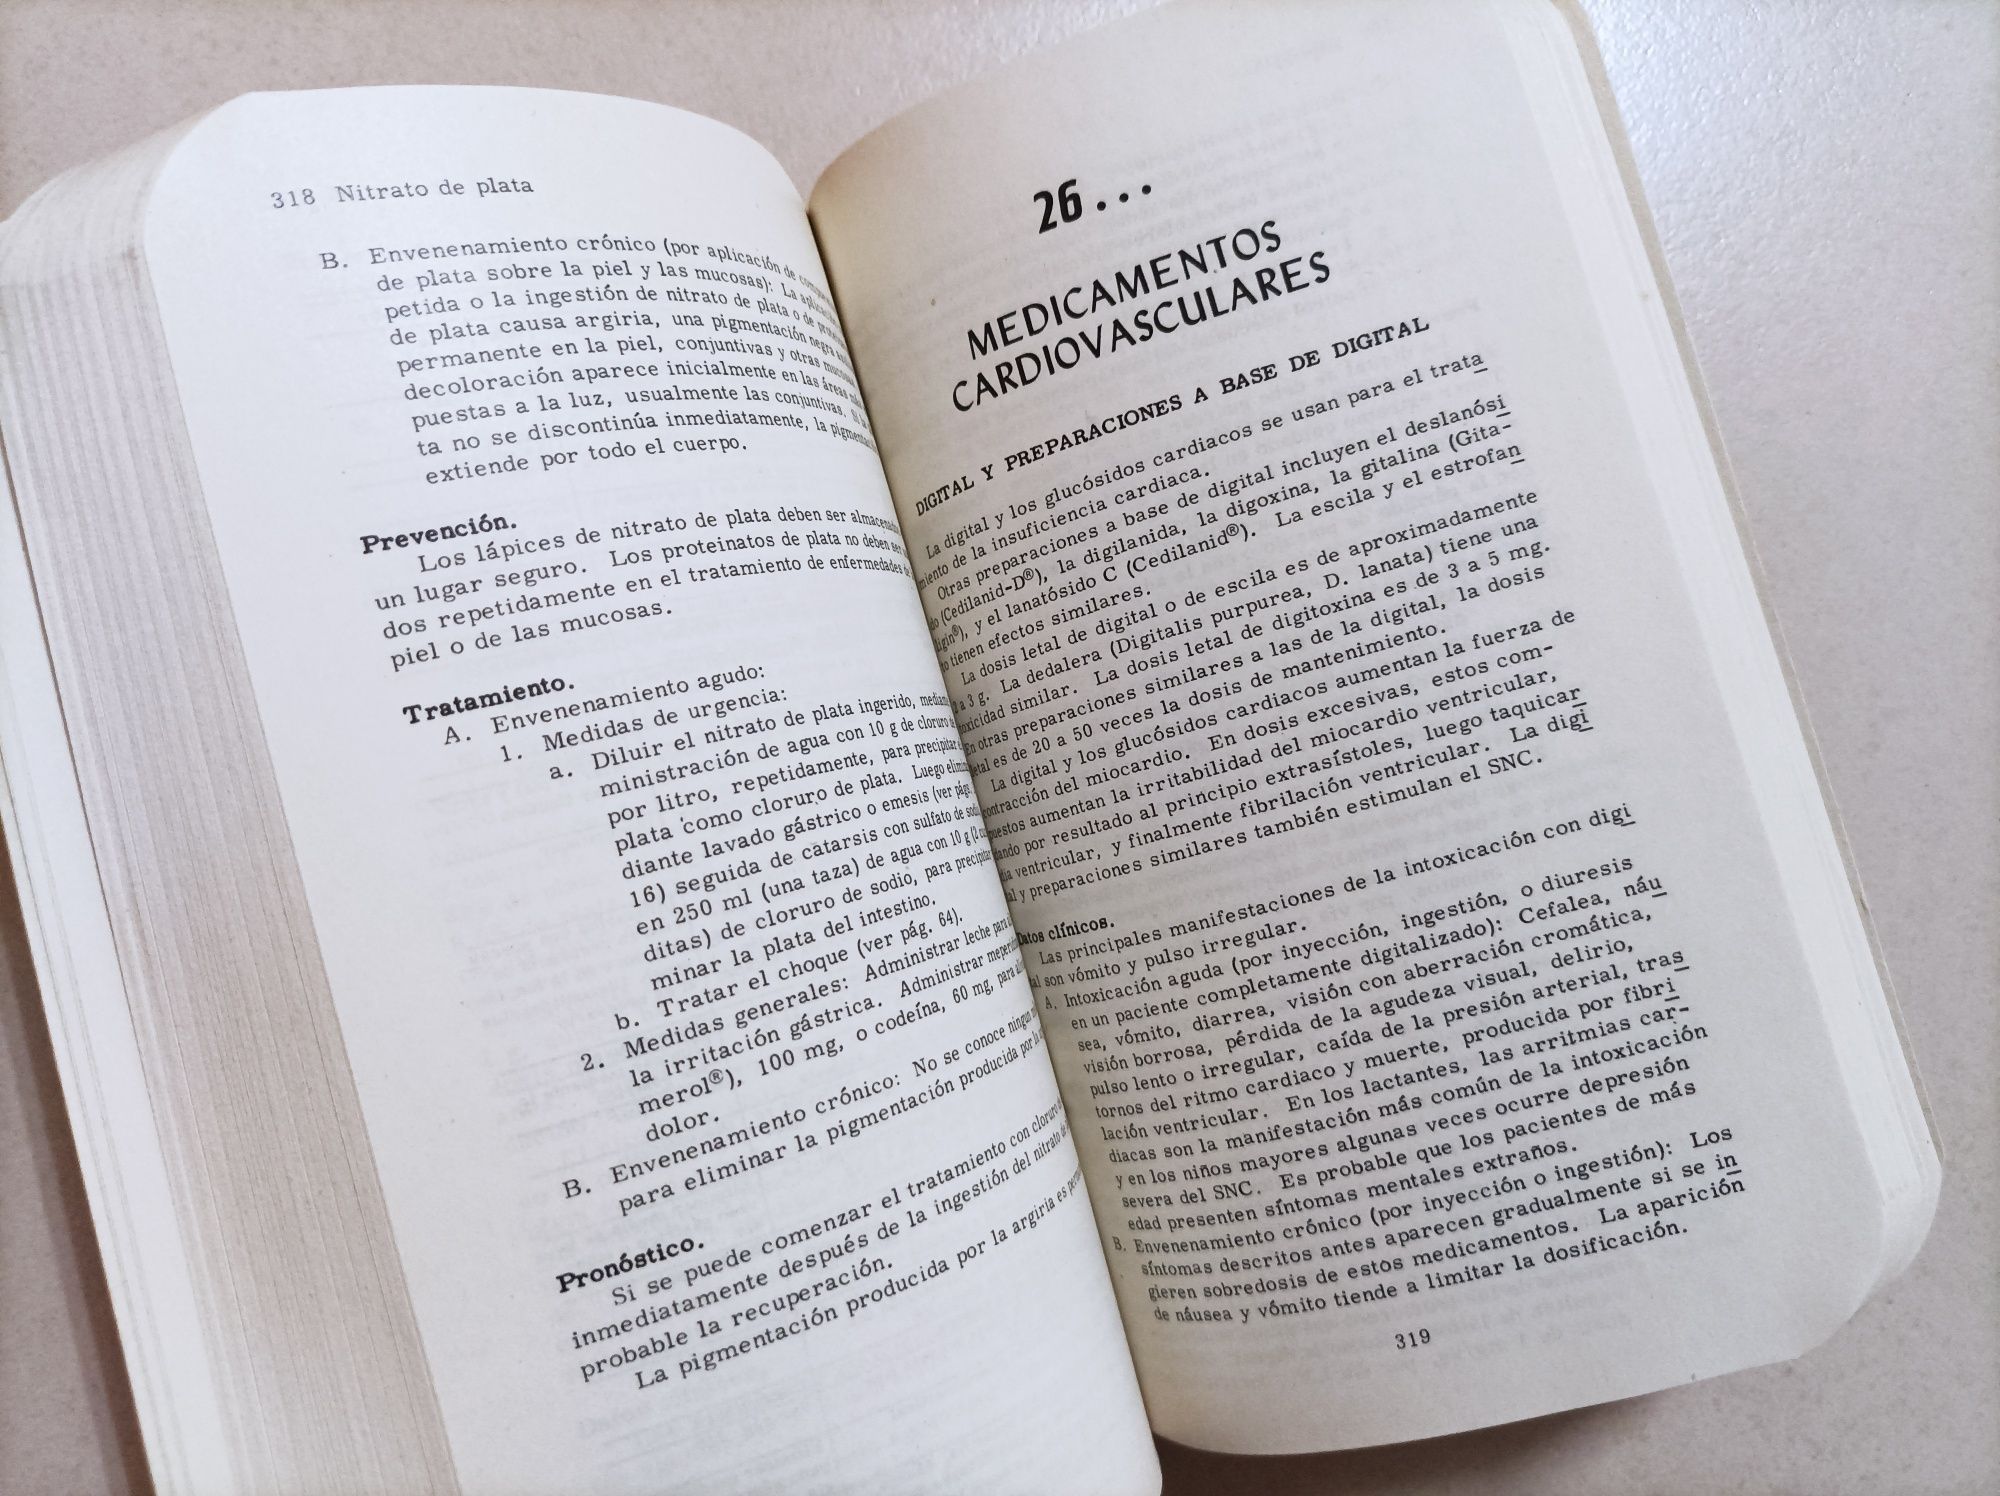 Manual de Envenenamentos de Robert H. Dreisbach